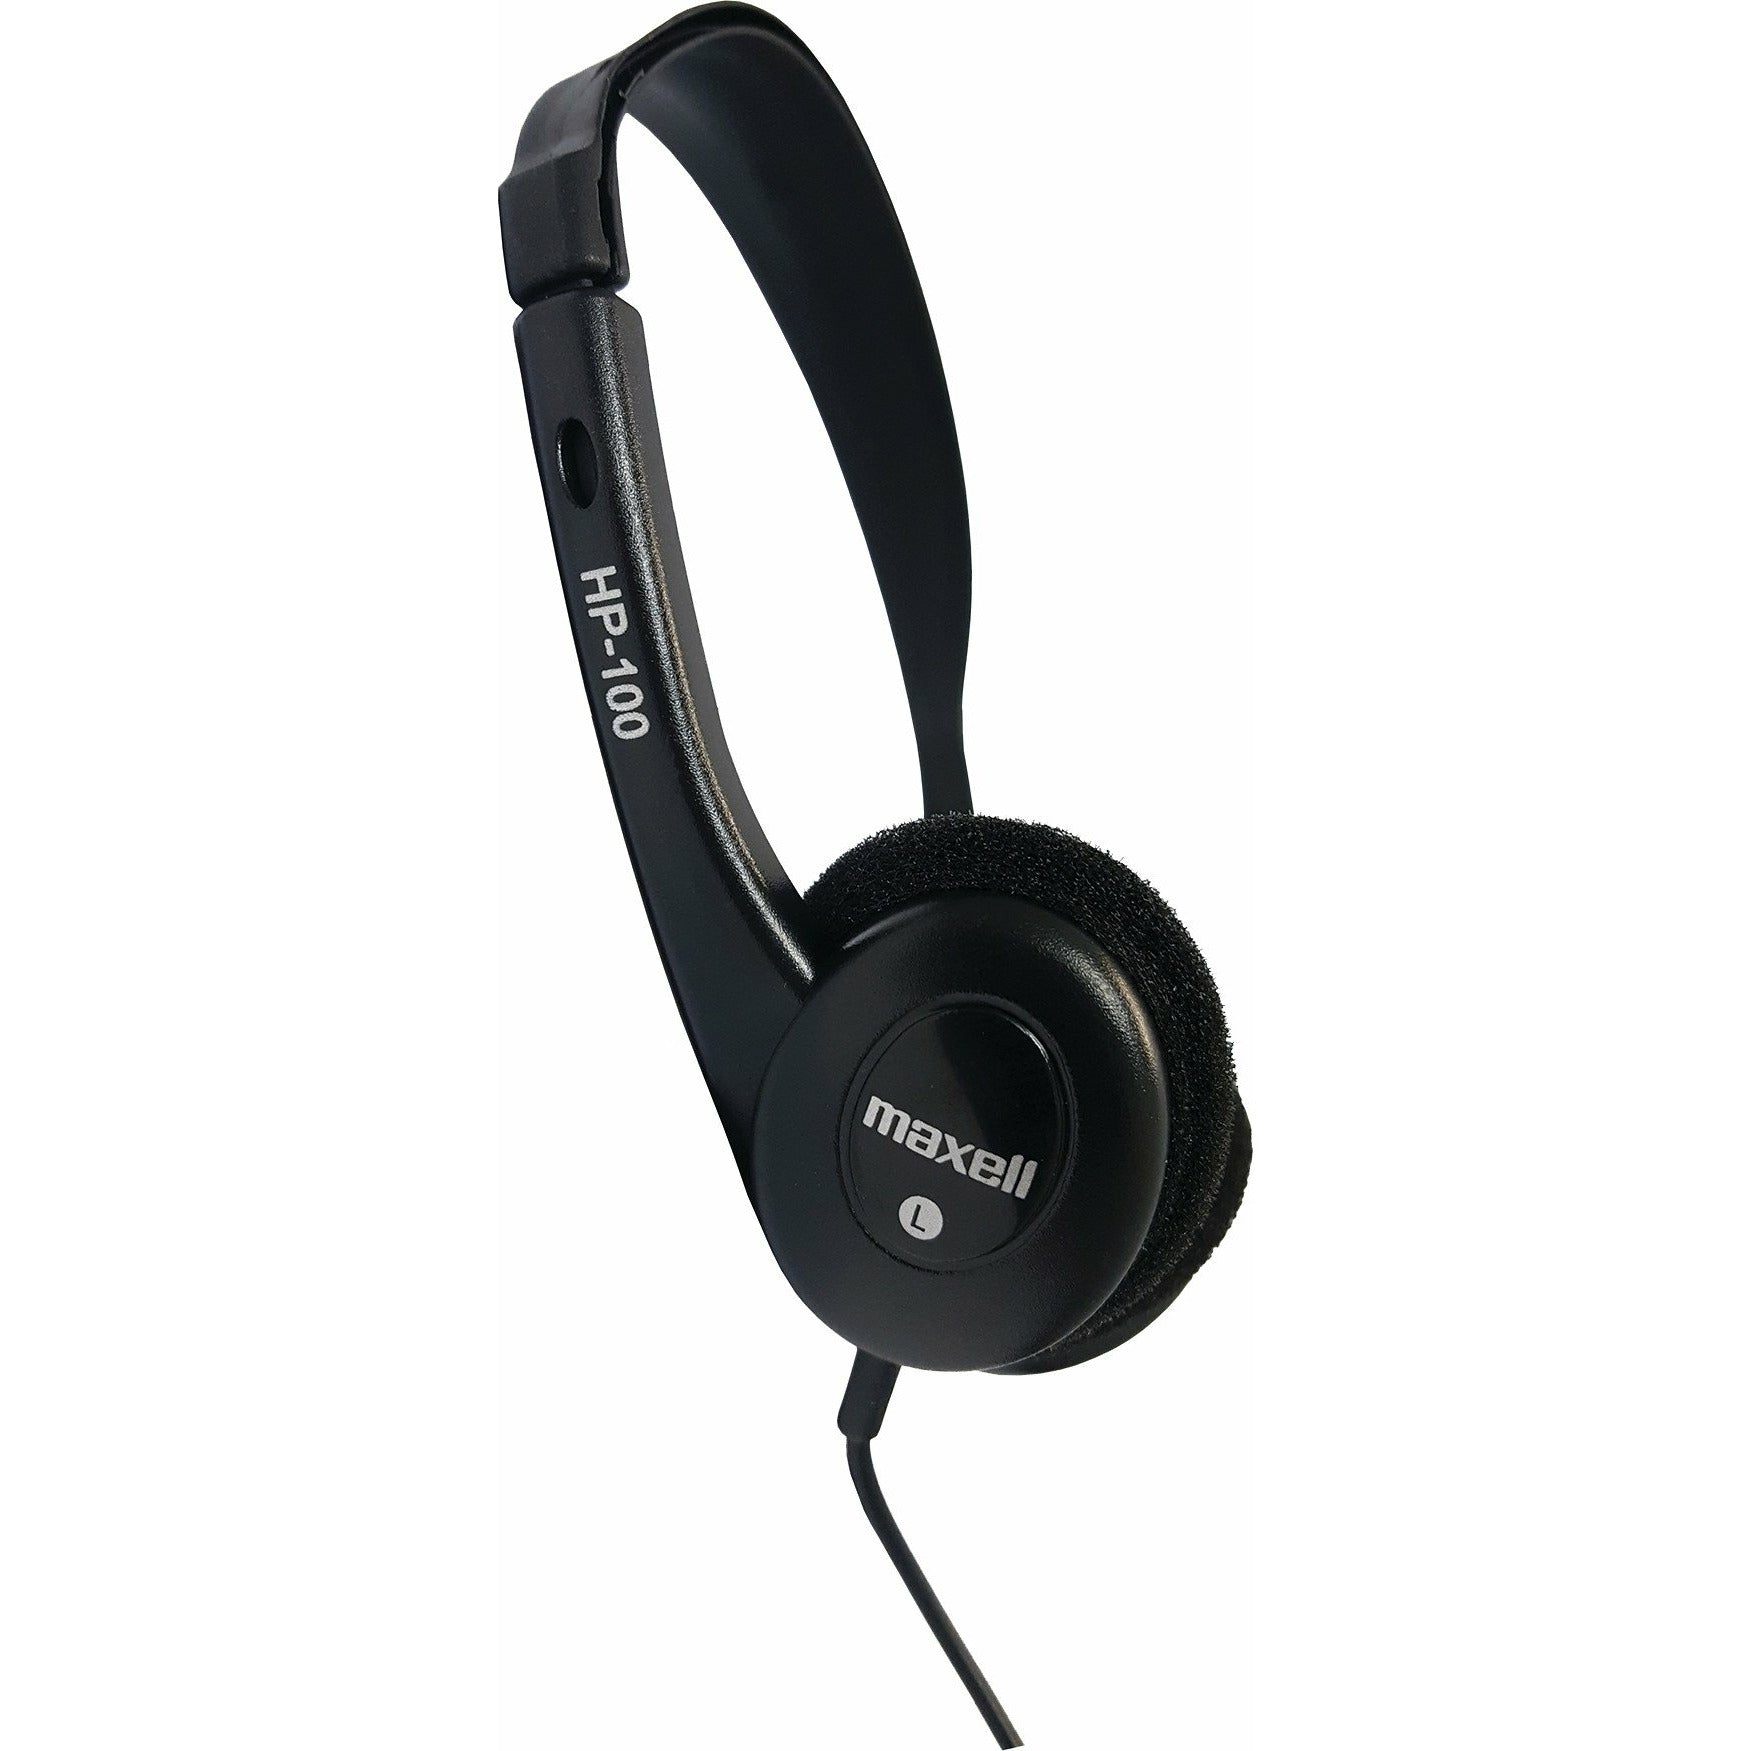 Maxell HP-100 Budget Stereo Headphones